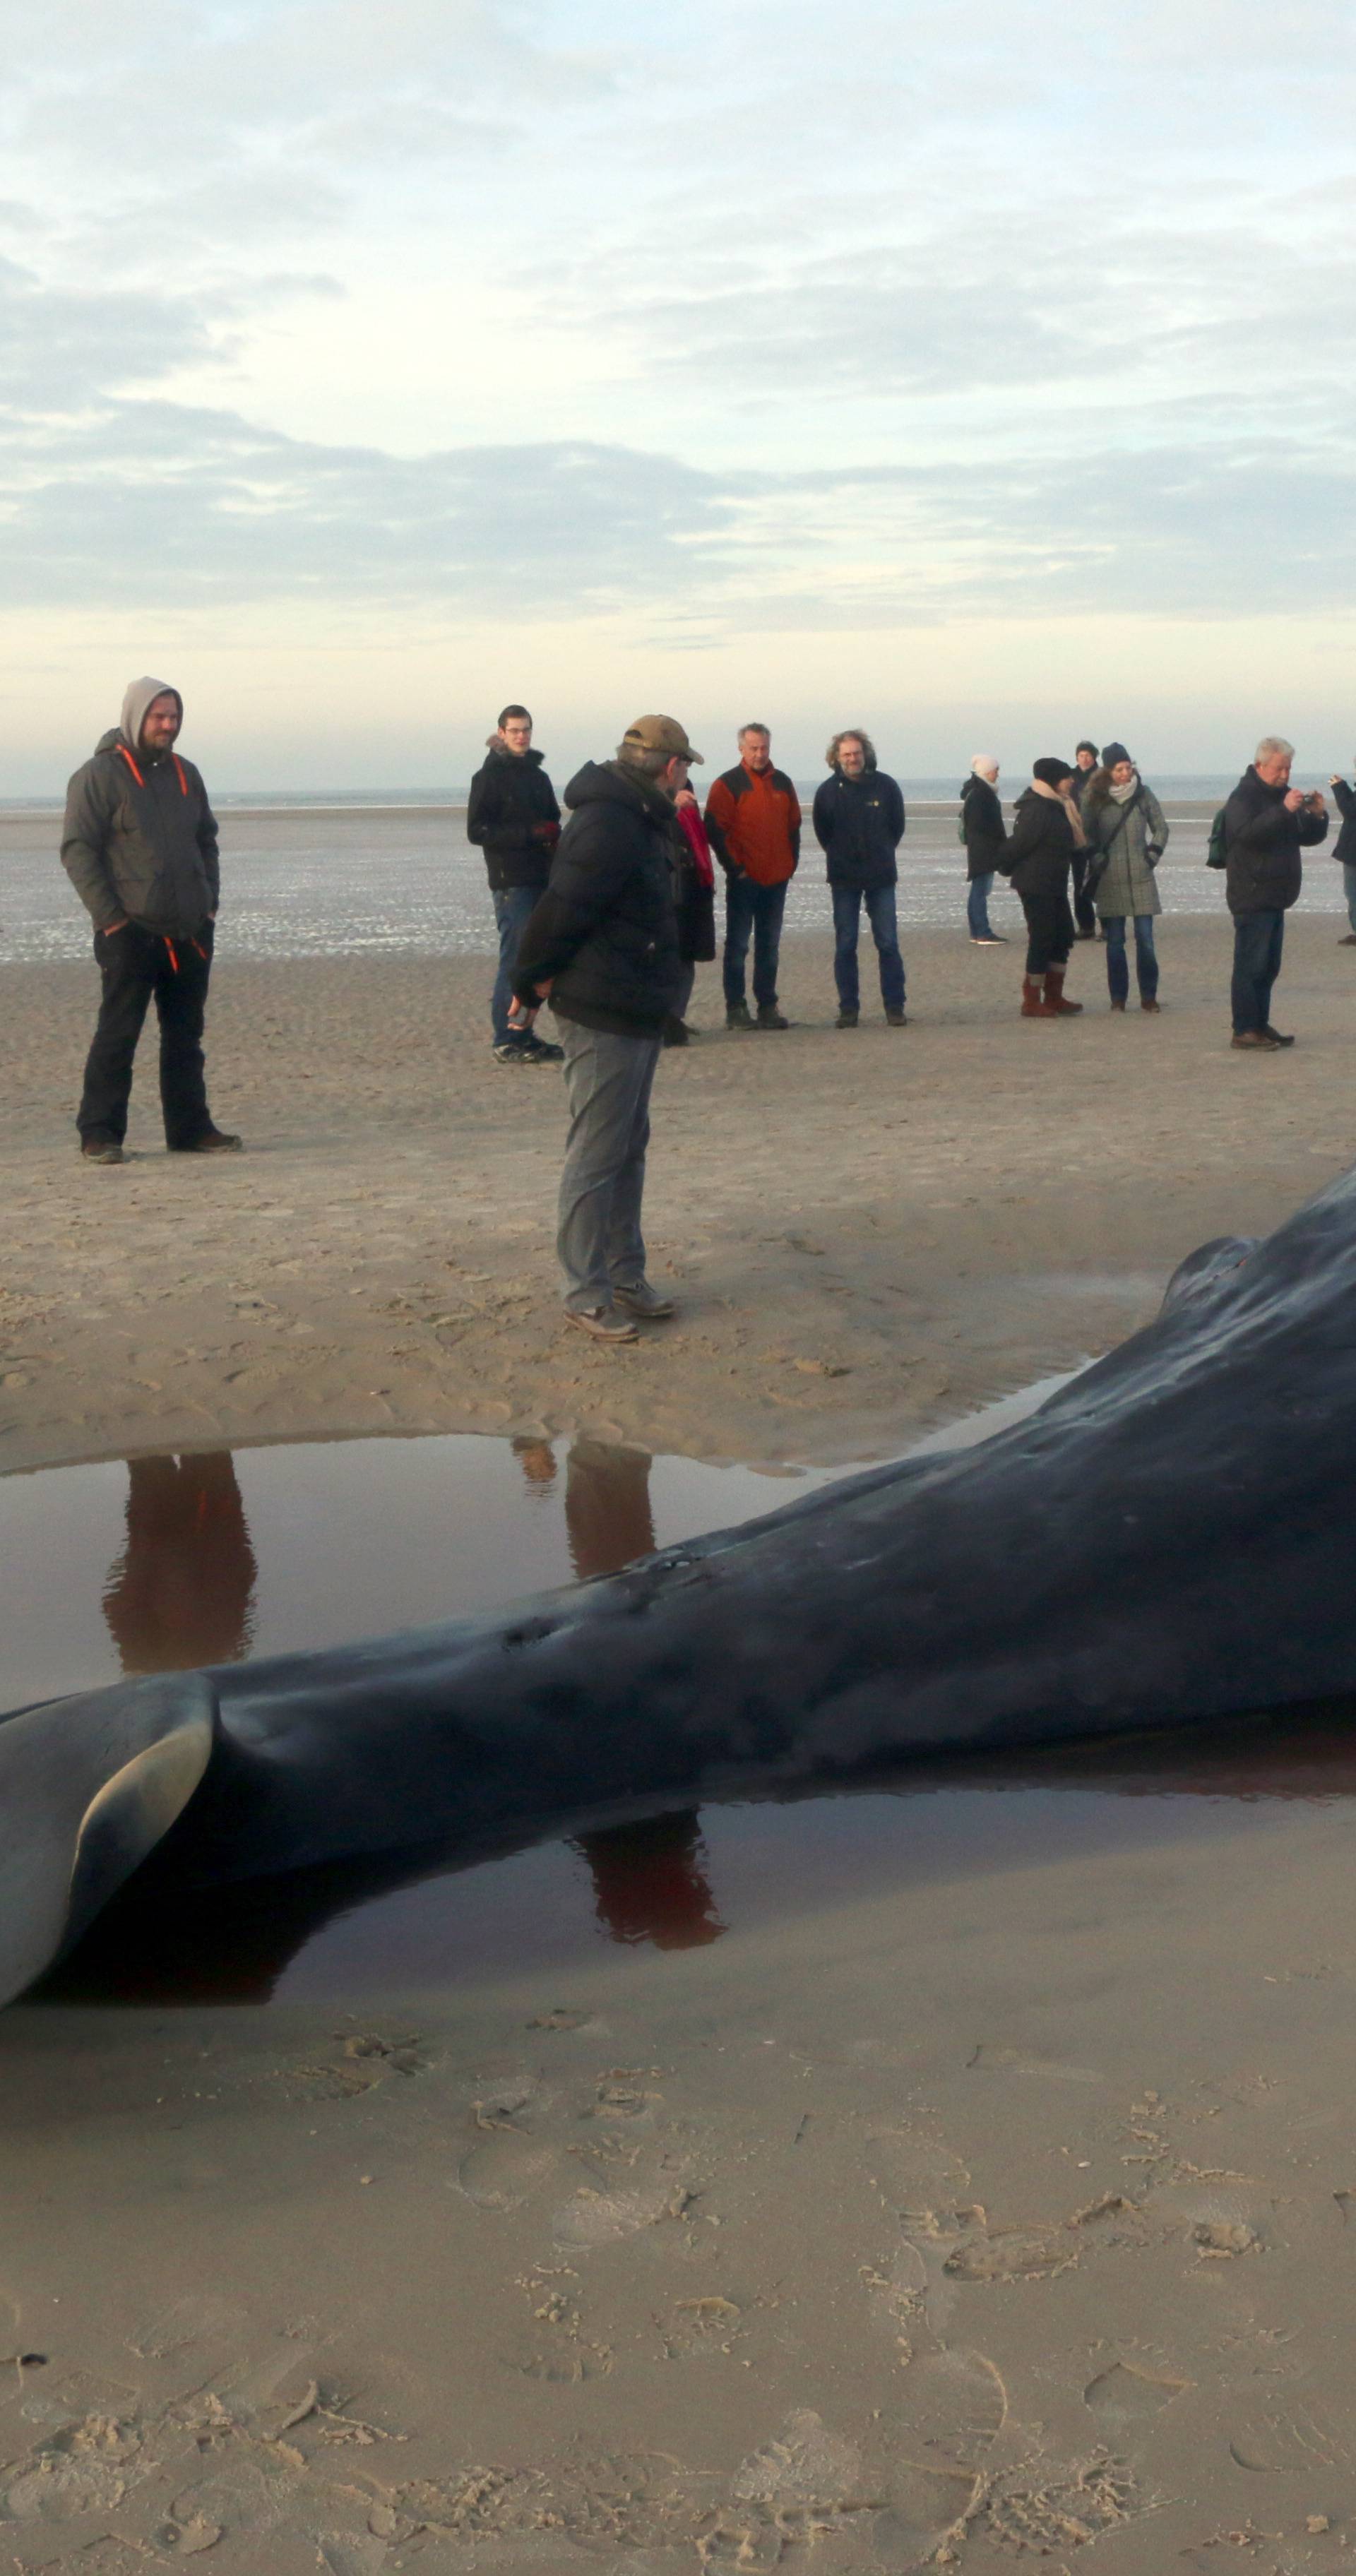 Two dead sperm whales washed ashore on Wangerooge island